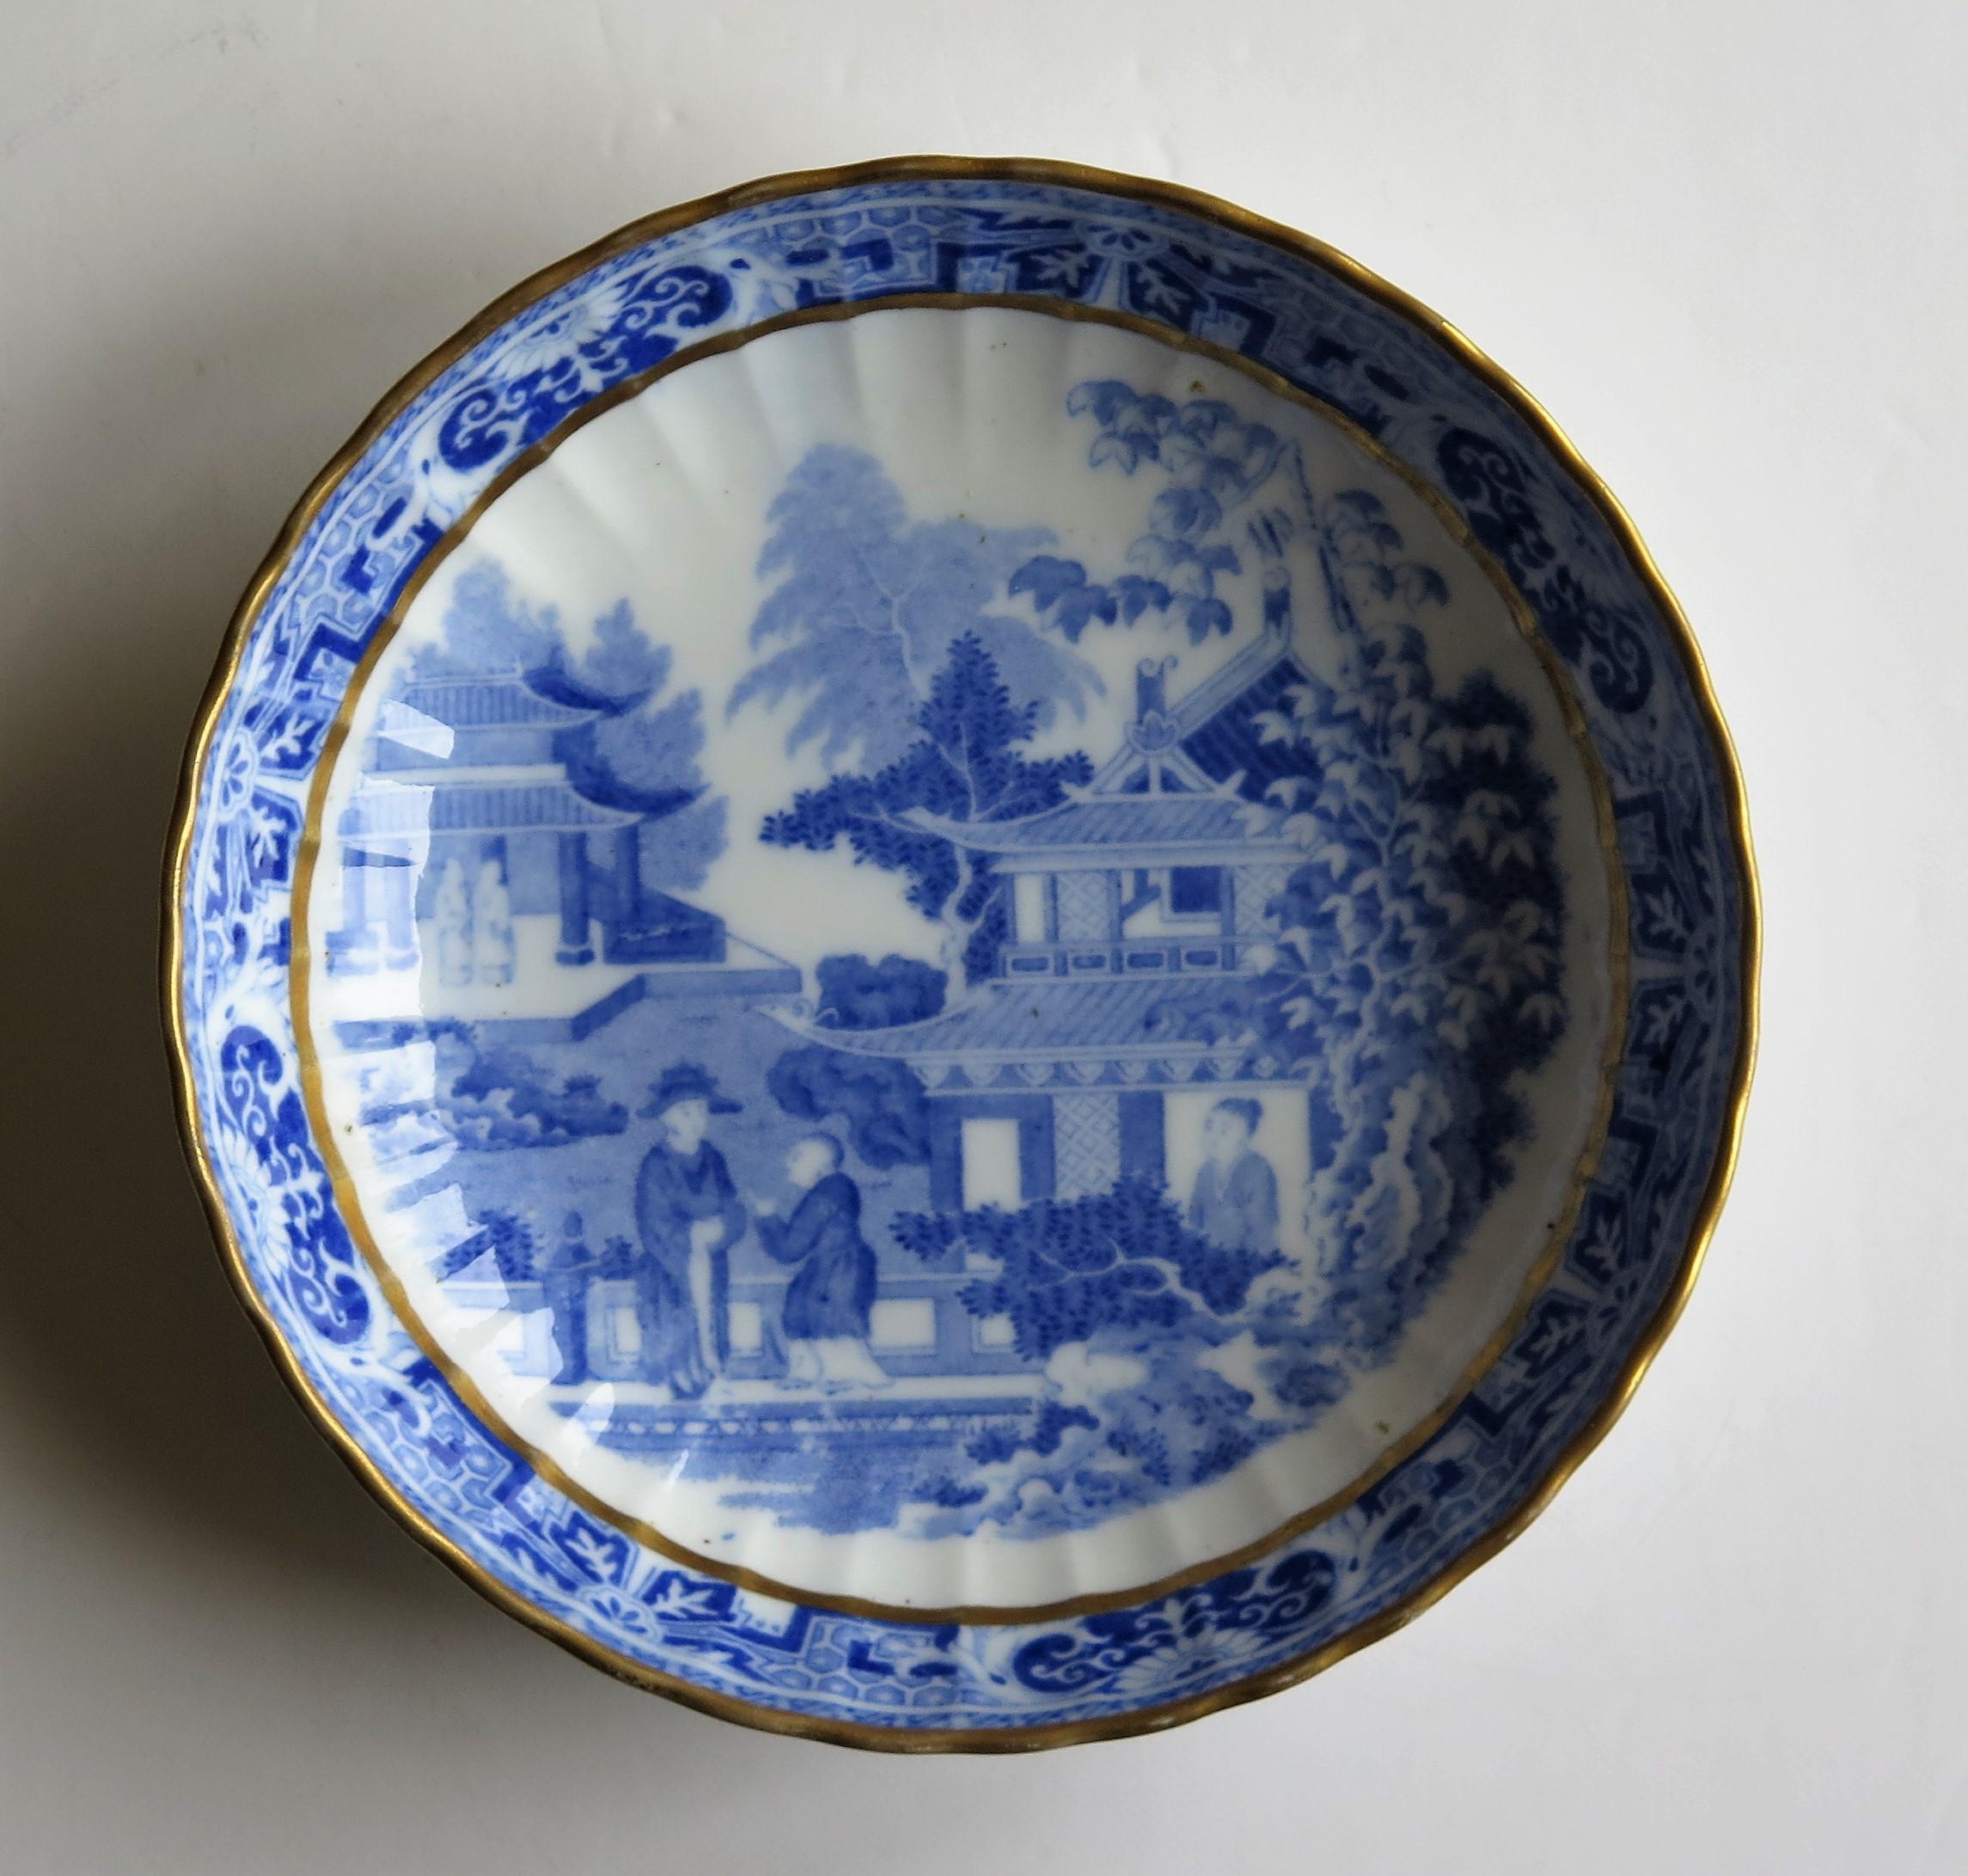 Glazed Miles Mason Saucer Dish Blue and White Porcelain Chinamen on Verandah Pattern